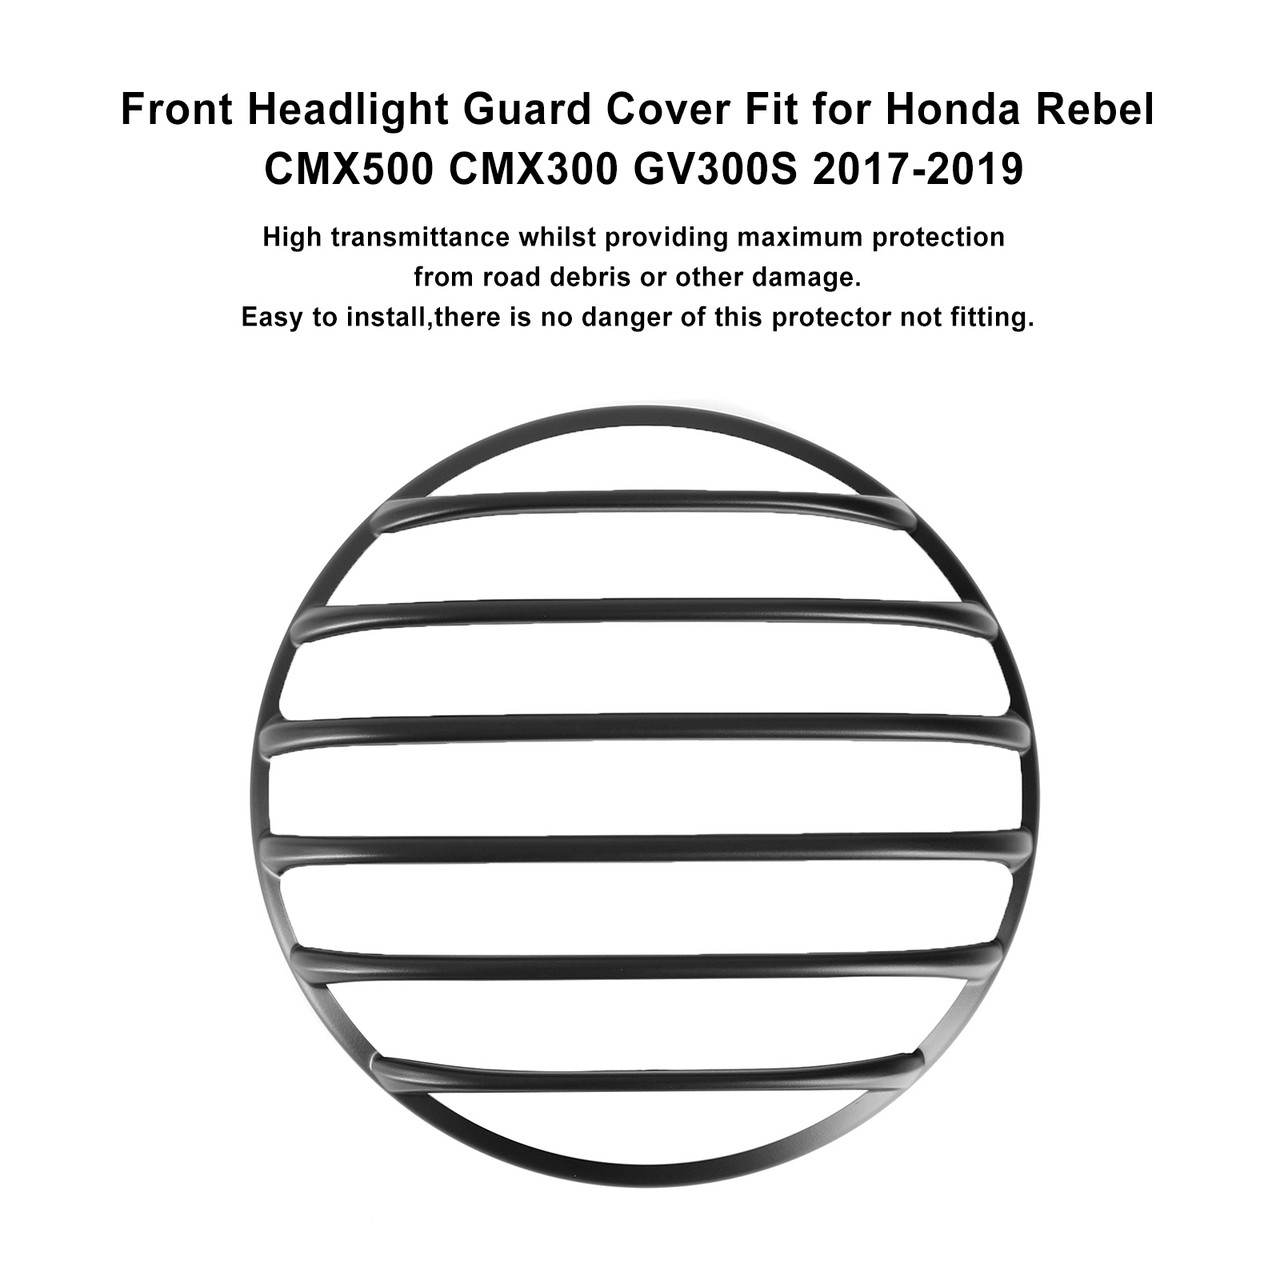 Front Headlight Guard Cover Fit For Honda Rebel Cmx500 Cmx300 Gv300S 17-19